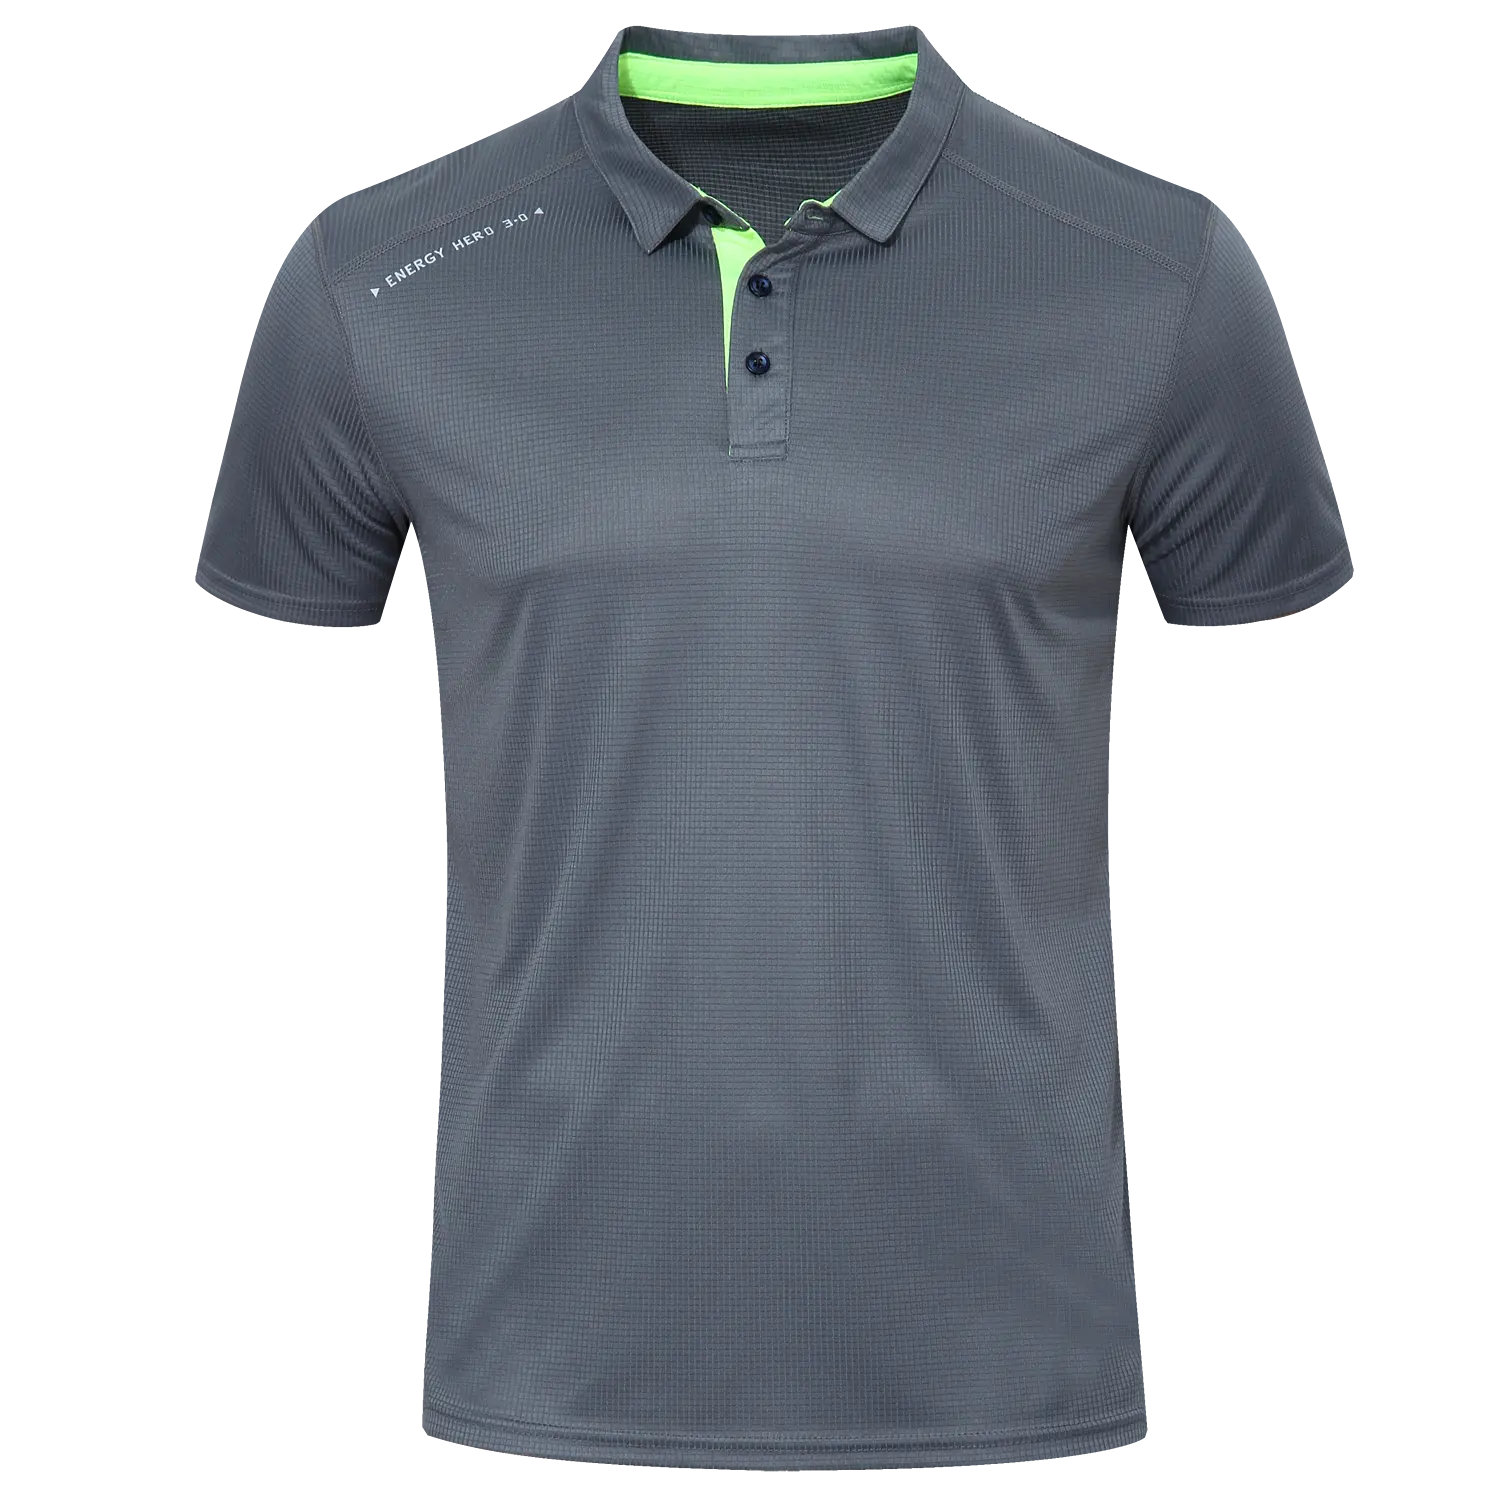 Wholesale Polo shirts customized to own logo Plains Men's golf T-shirt